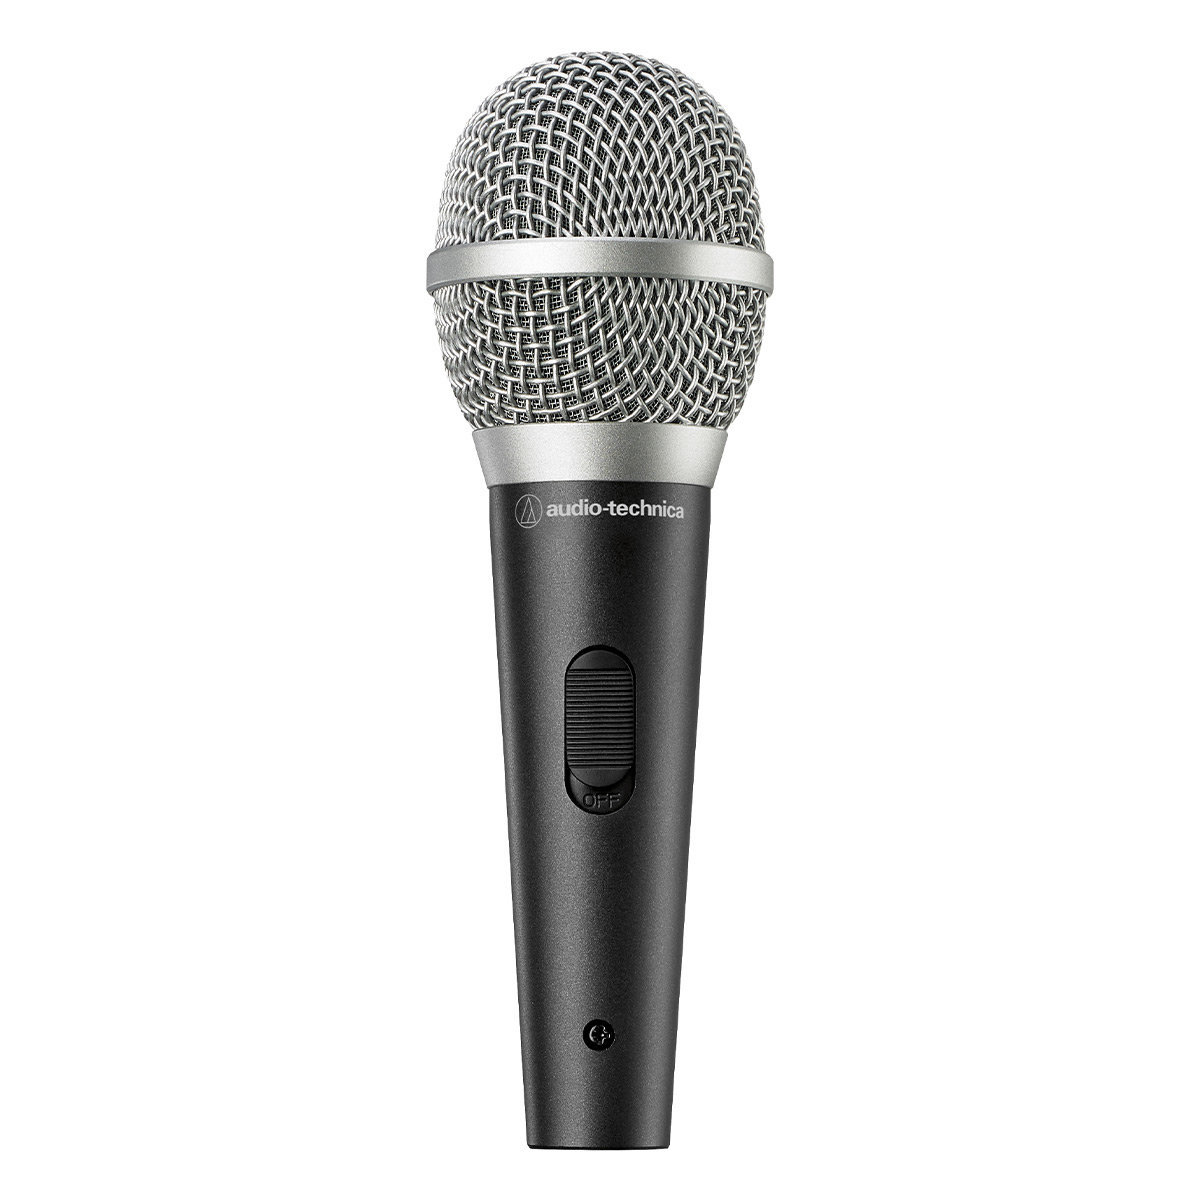 ATR1500 Audio Technica microphone for rental